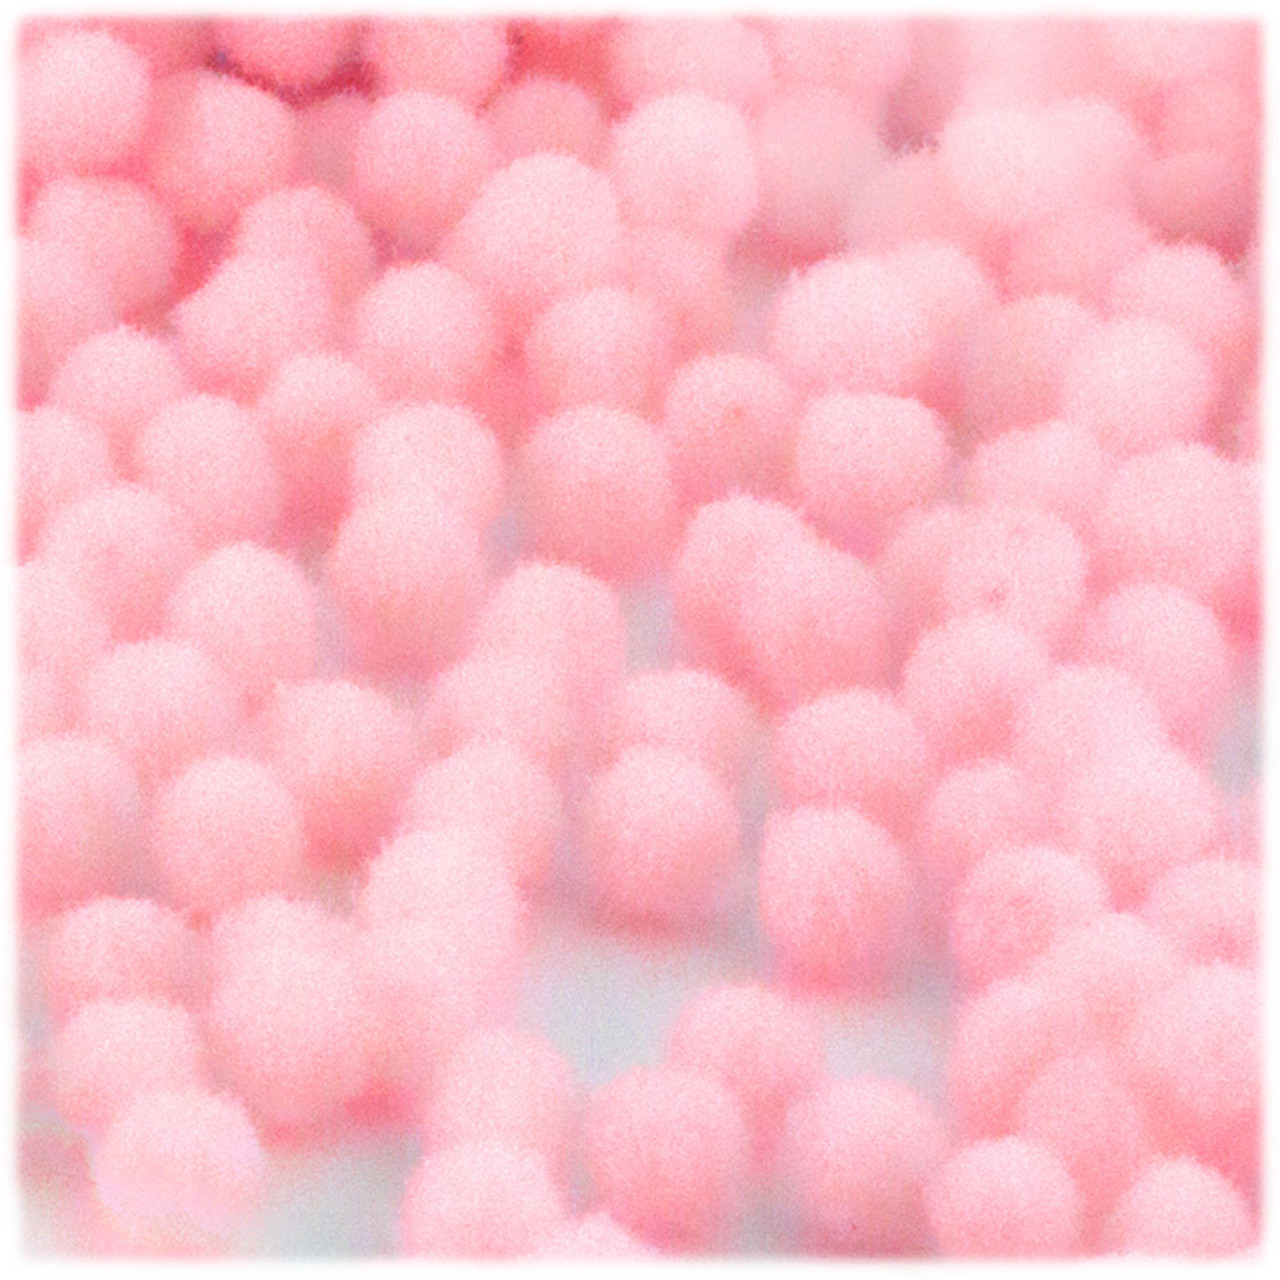 Pom Poms, solid Color, 0.5-inch (12mm), 100-pc, Light Pink